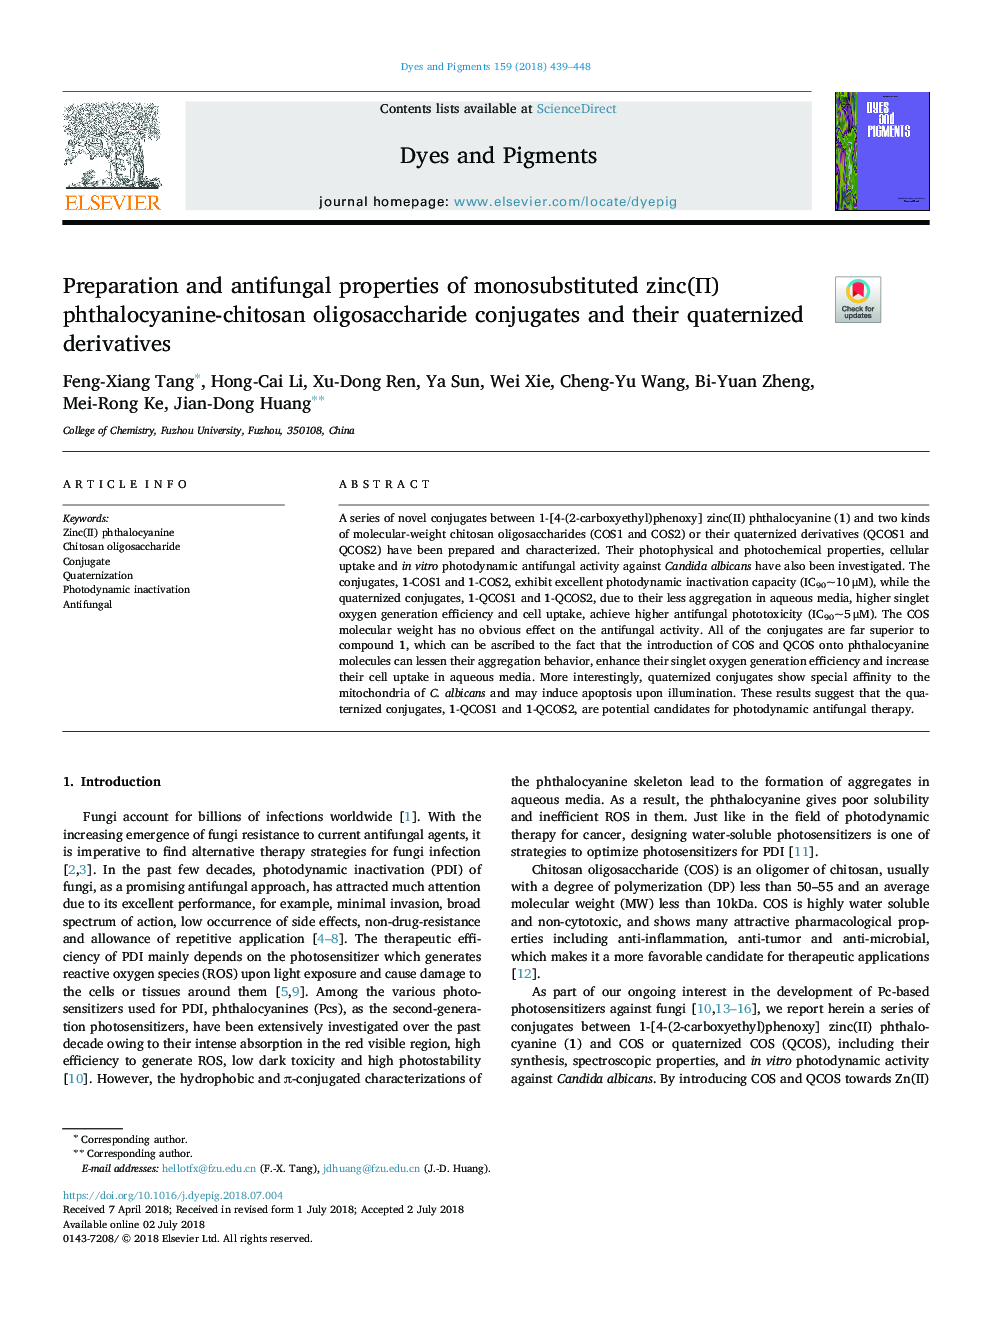 Preparation and antifungal properties of monosubstituted zinc(Ð) phthalocyanine-chitosan oligosaccharide conjugates and their quaternized derivatives